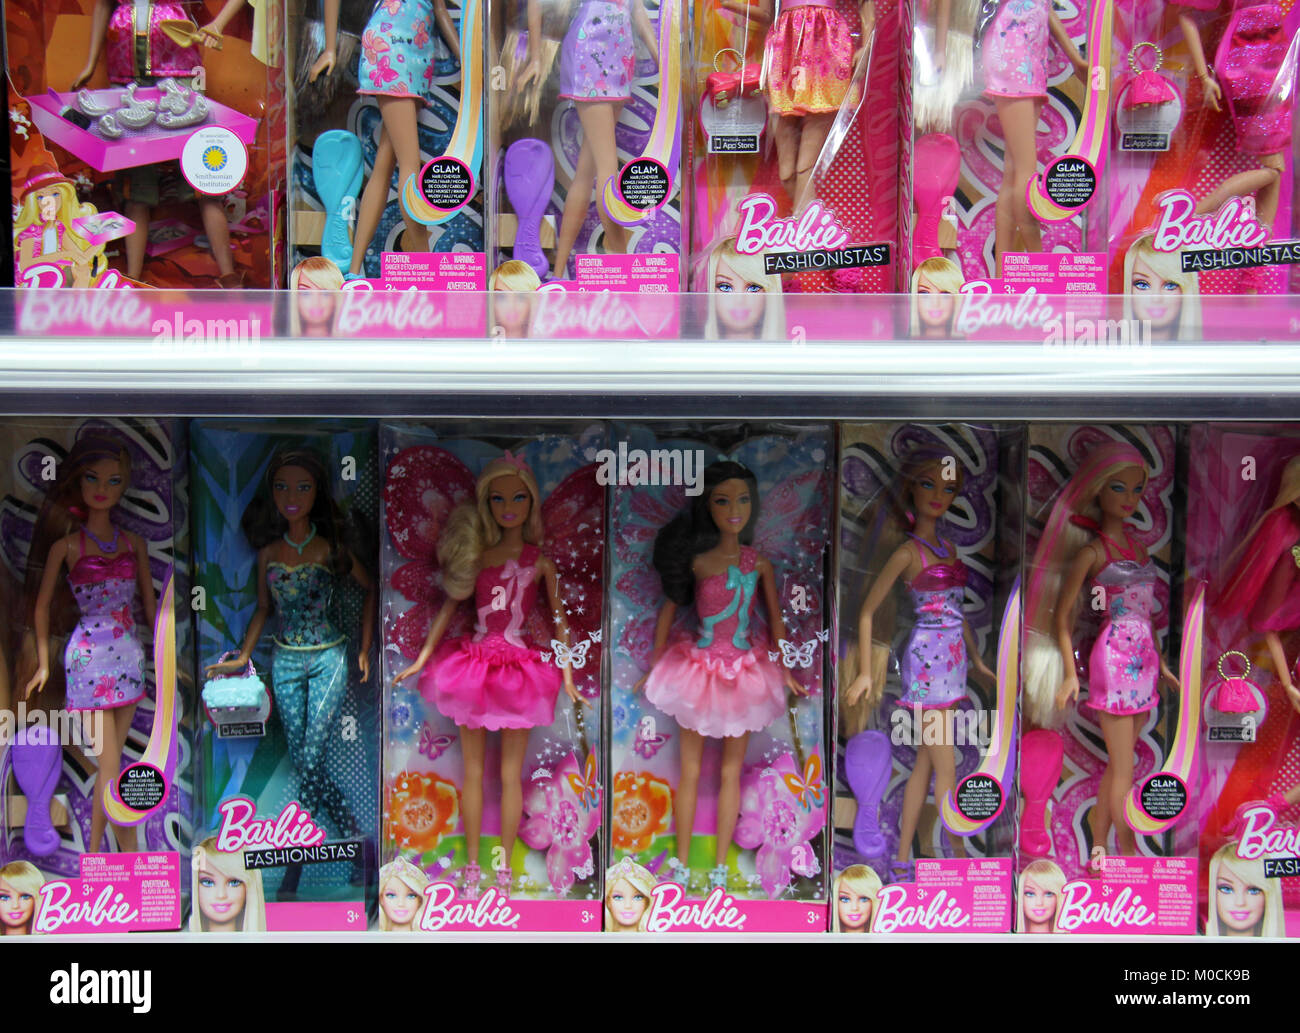 Portugal, Algarve, monchique. Circa 04.11.2013. Barbie dolls for sale on  shelves in a supermarket in Portugal. photo taken 04 11 2013 Stock Photo -  Alamy